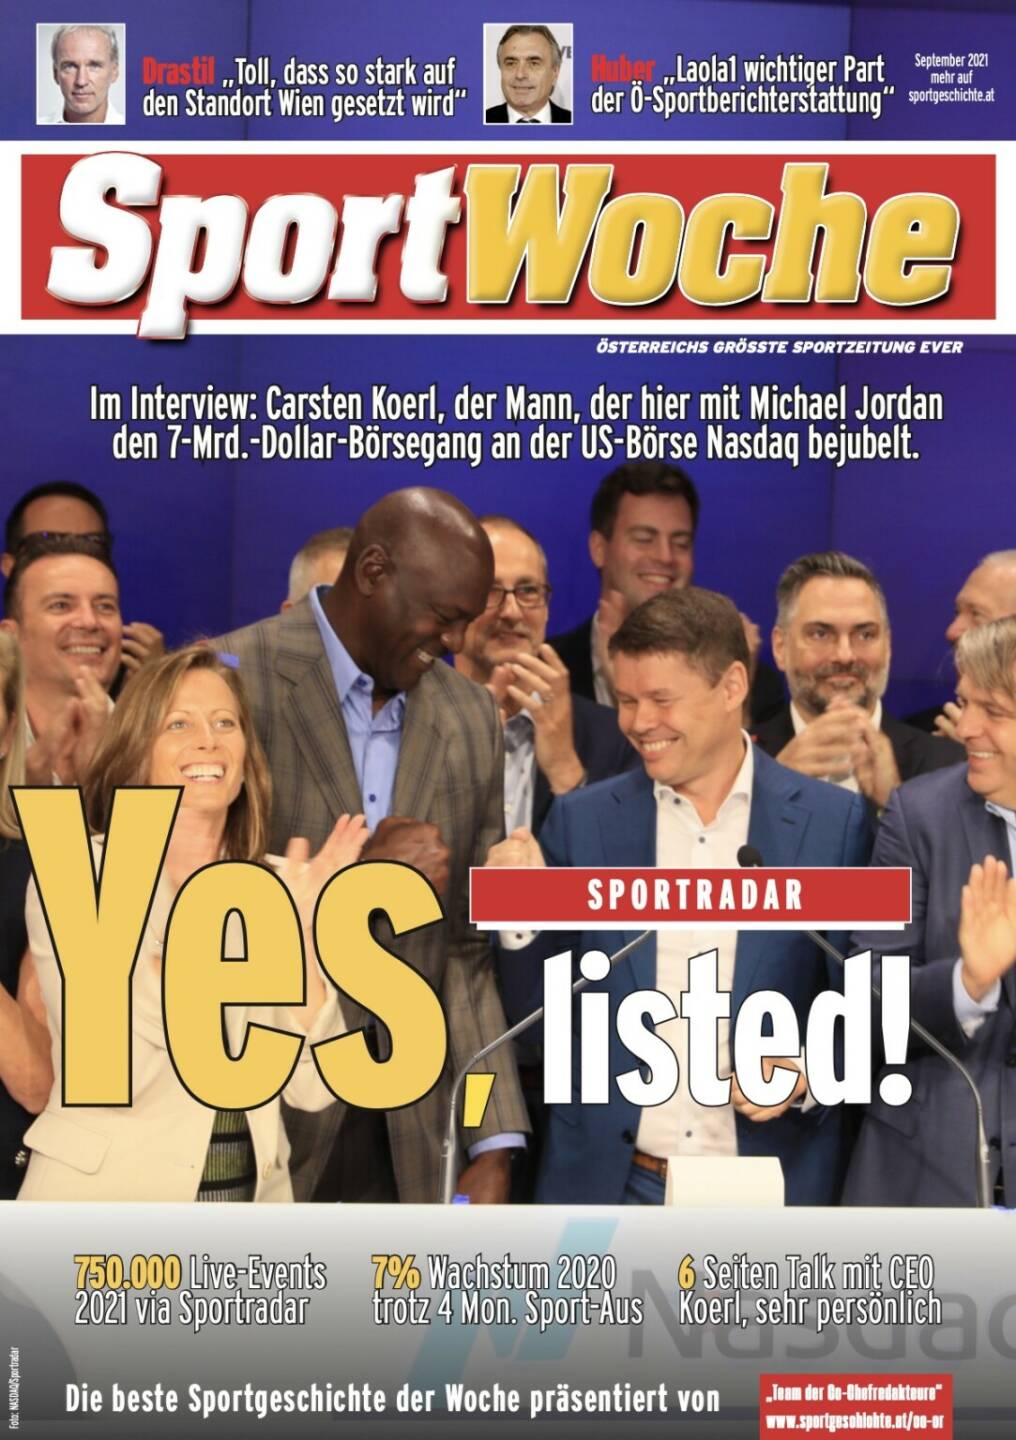 Sportradar - Yes, listed! Im Interview: Carsten Koerl, der Mann, der hier mit Michael Jordan den 7-Mrd.-Dollar-Börsegang an der US-Börse Nasdaq bejubelt.